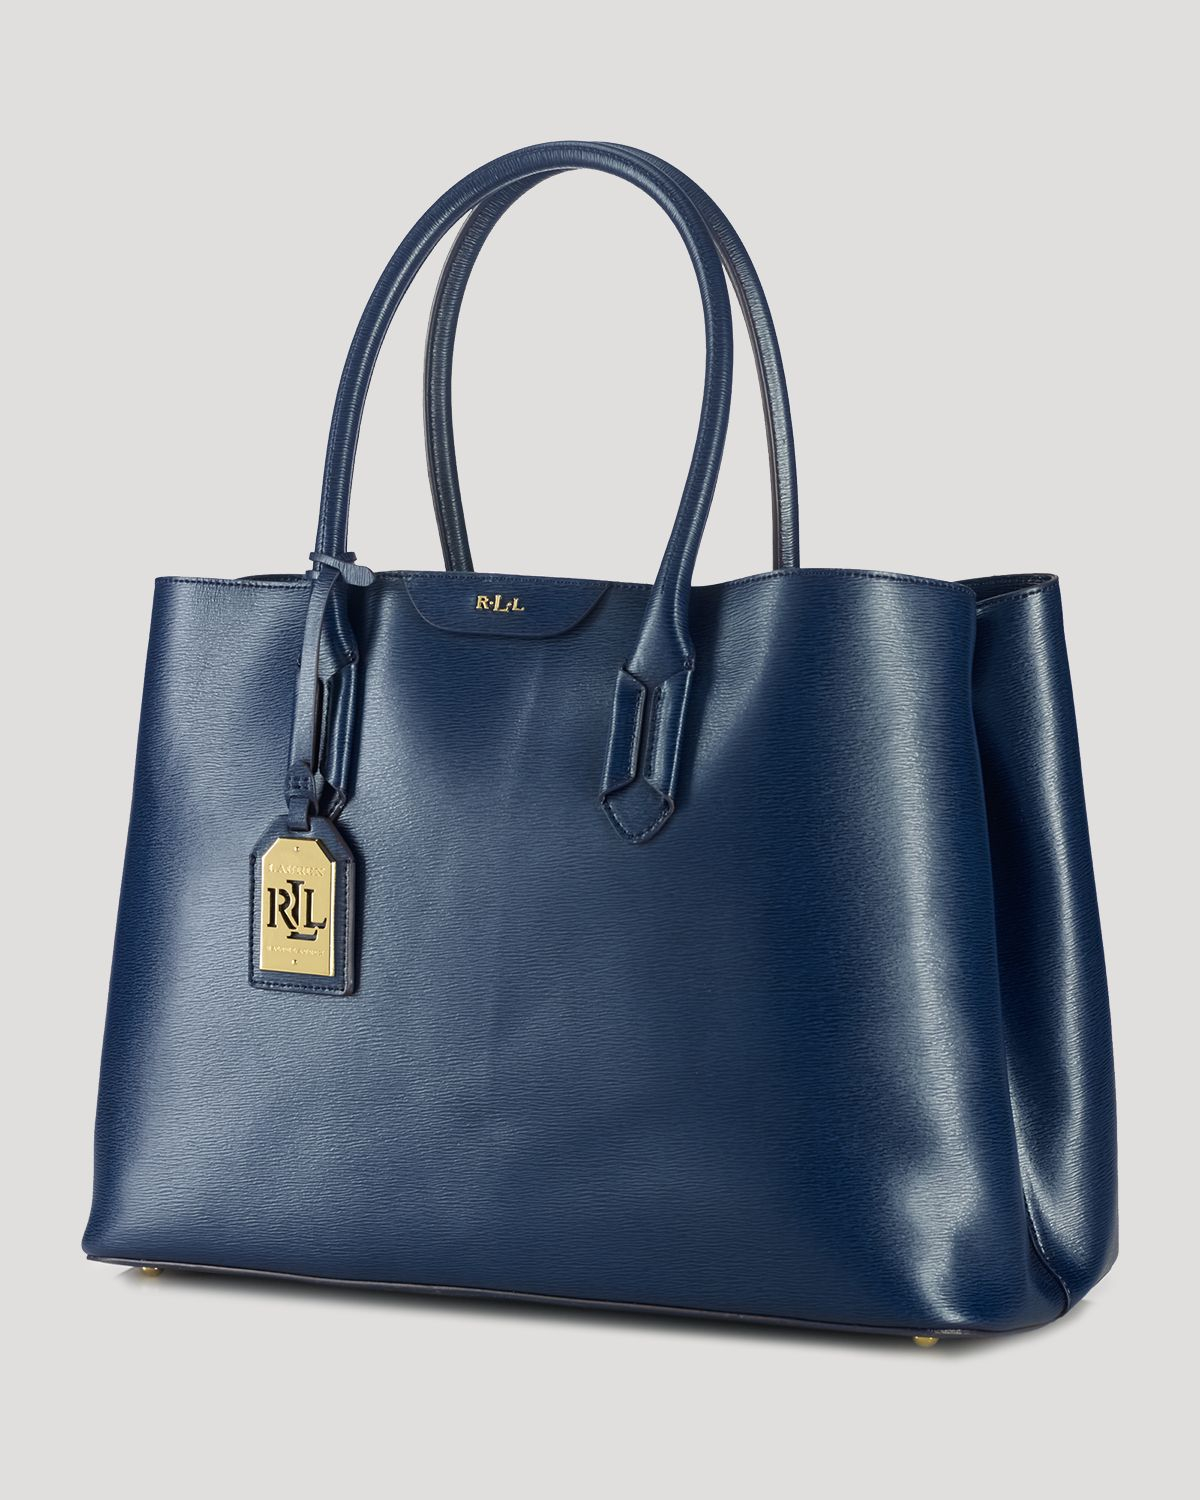 ralph lauren handbags blue - 65% OFF 